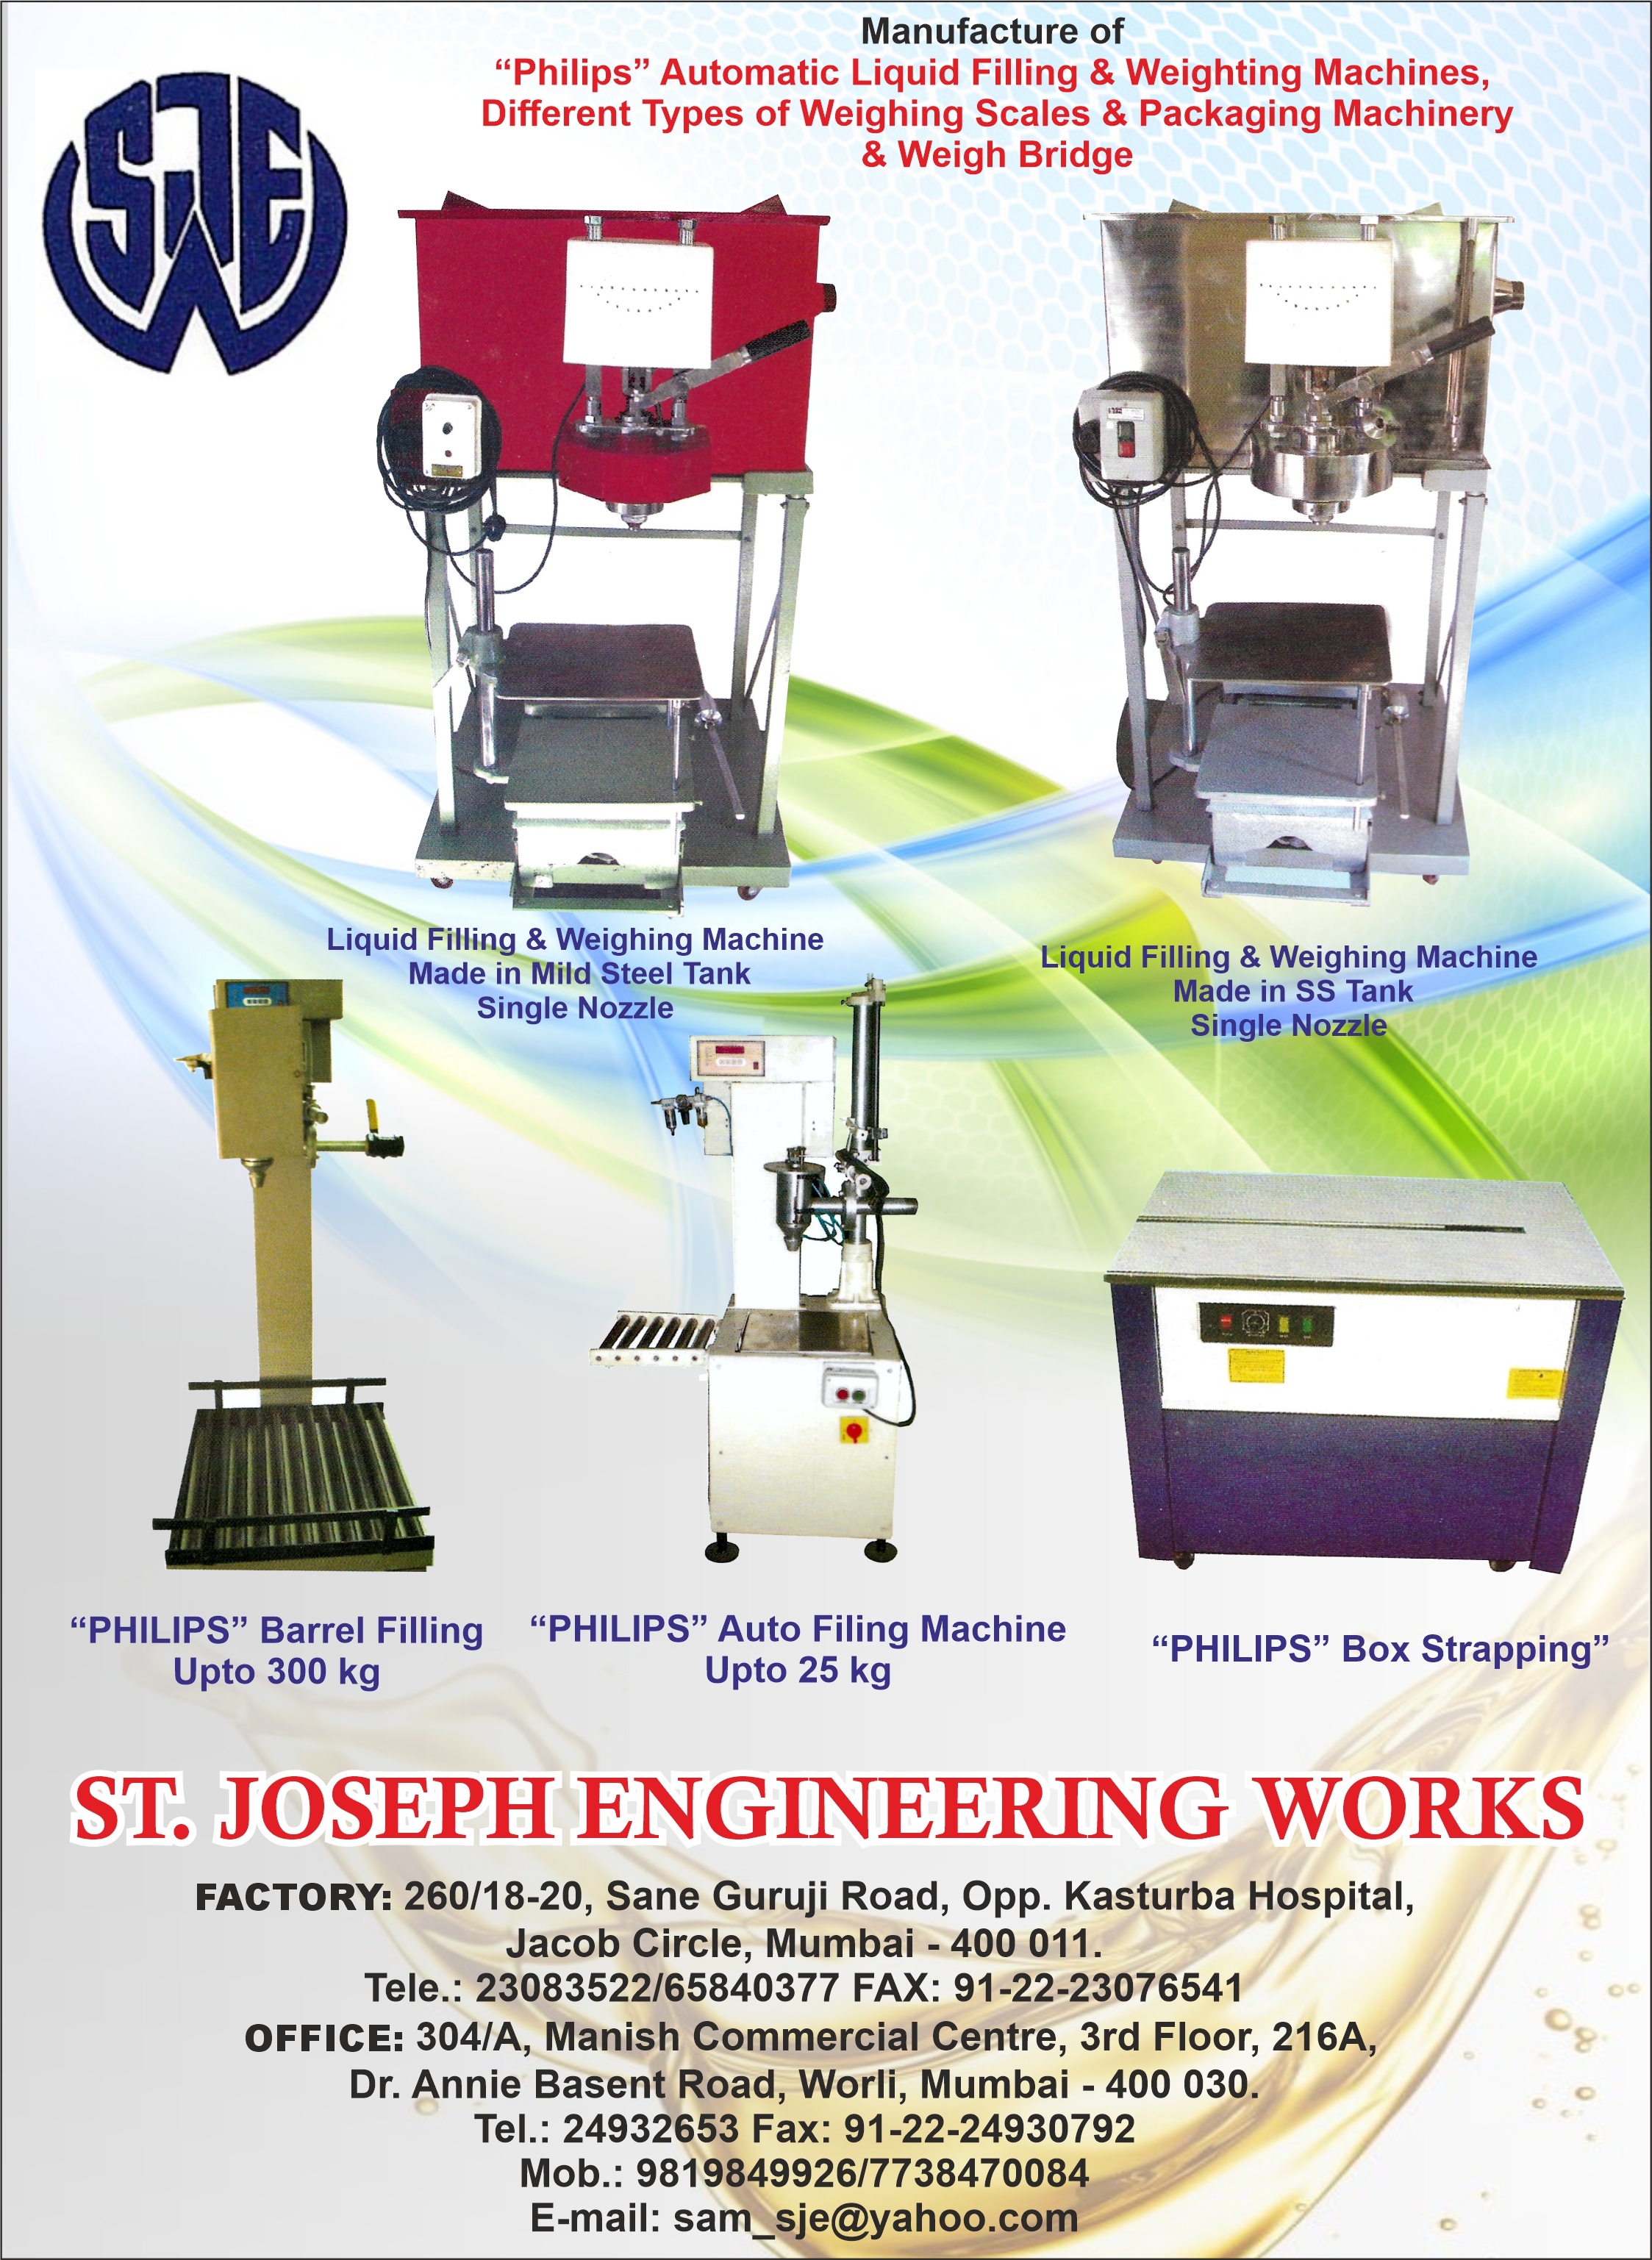 St. Joseph Engineering Works